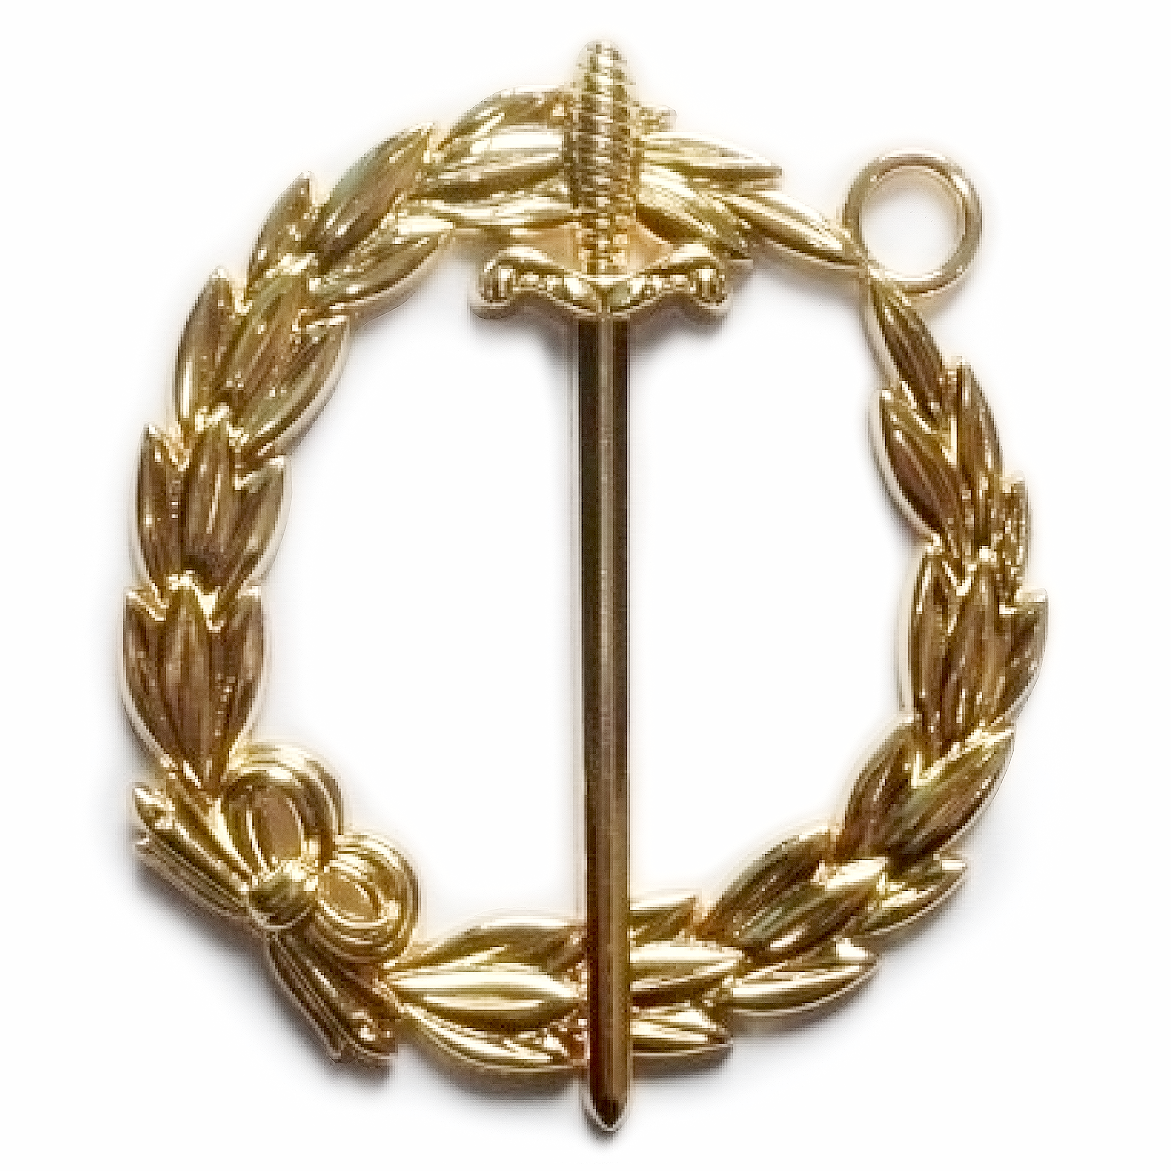 Grand Tyler Deacon Blue Lodge Officer Collar Jewel - Gold Metal - Bricks Masons